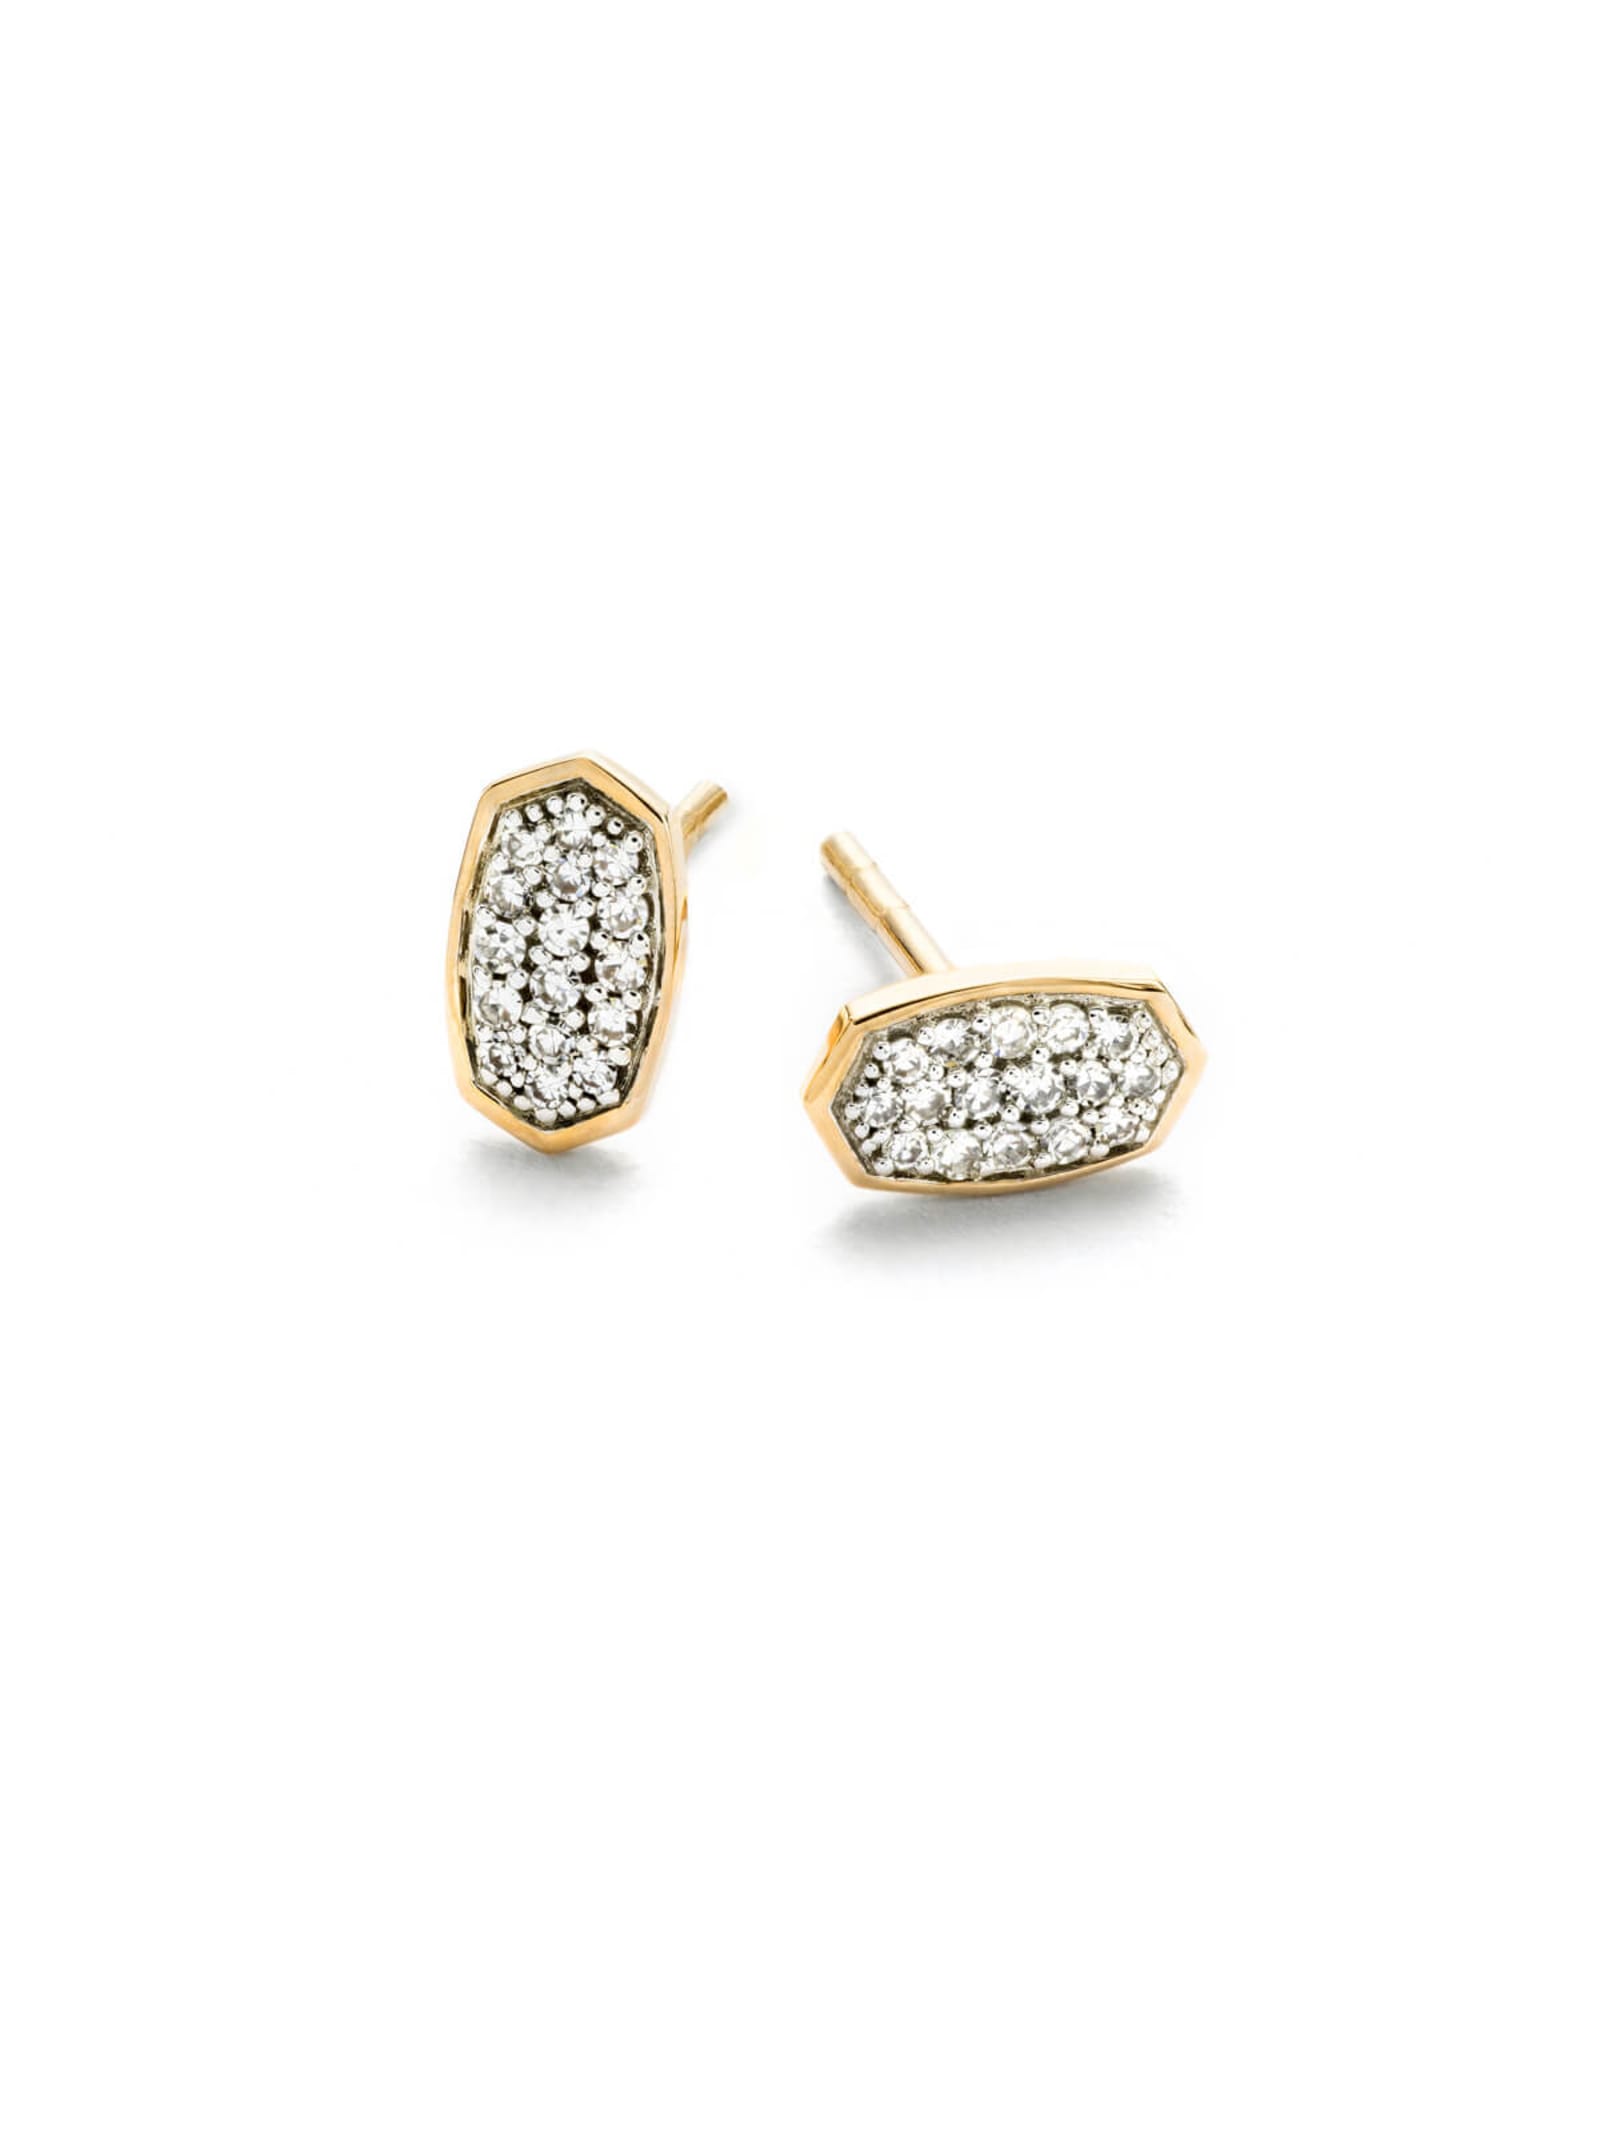 Kendra Scott Marisa Stud Earrings in White Diamond and 14k Yellow Gold | Diamonds